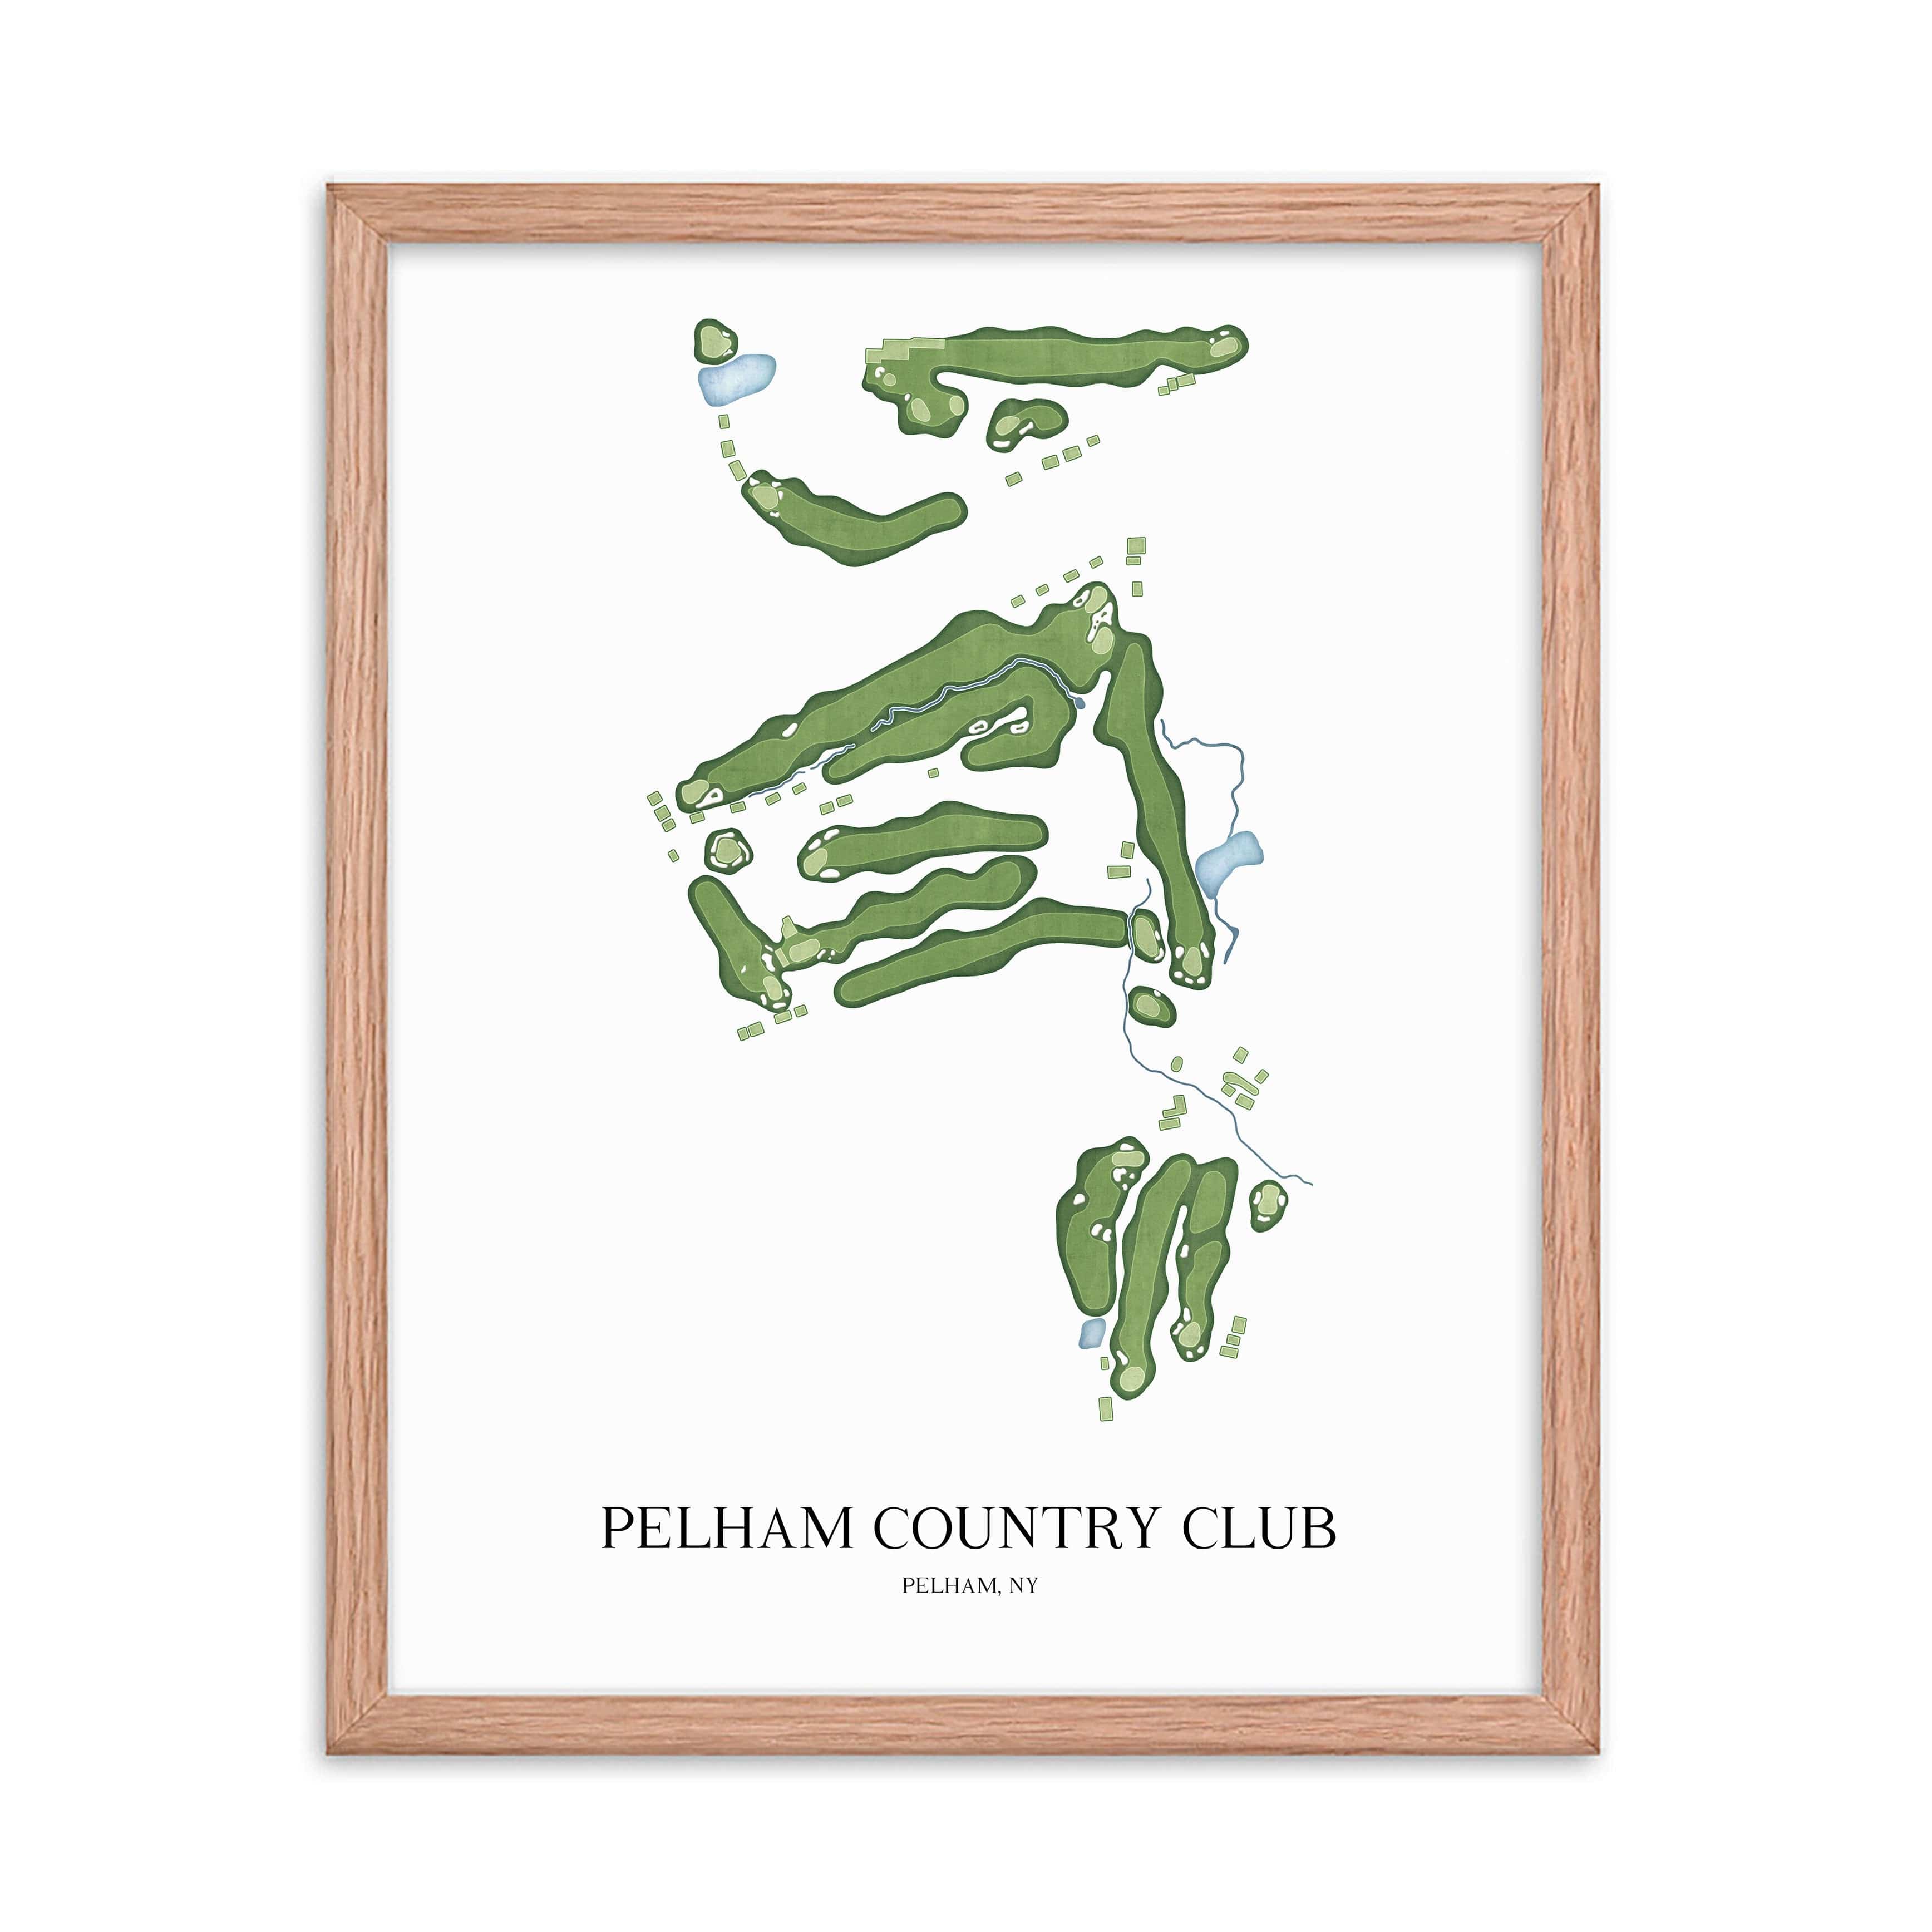 The 19th Hole Golf Shop - Golf Course Prints -  Pelham Country Club Golf Course Map